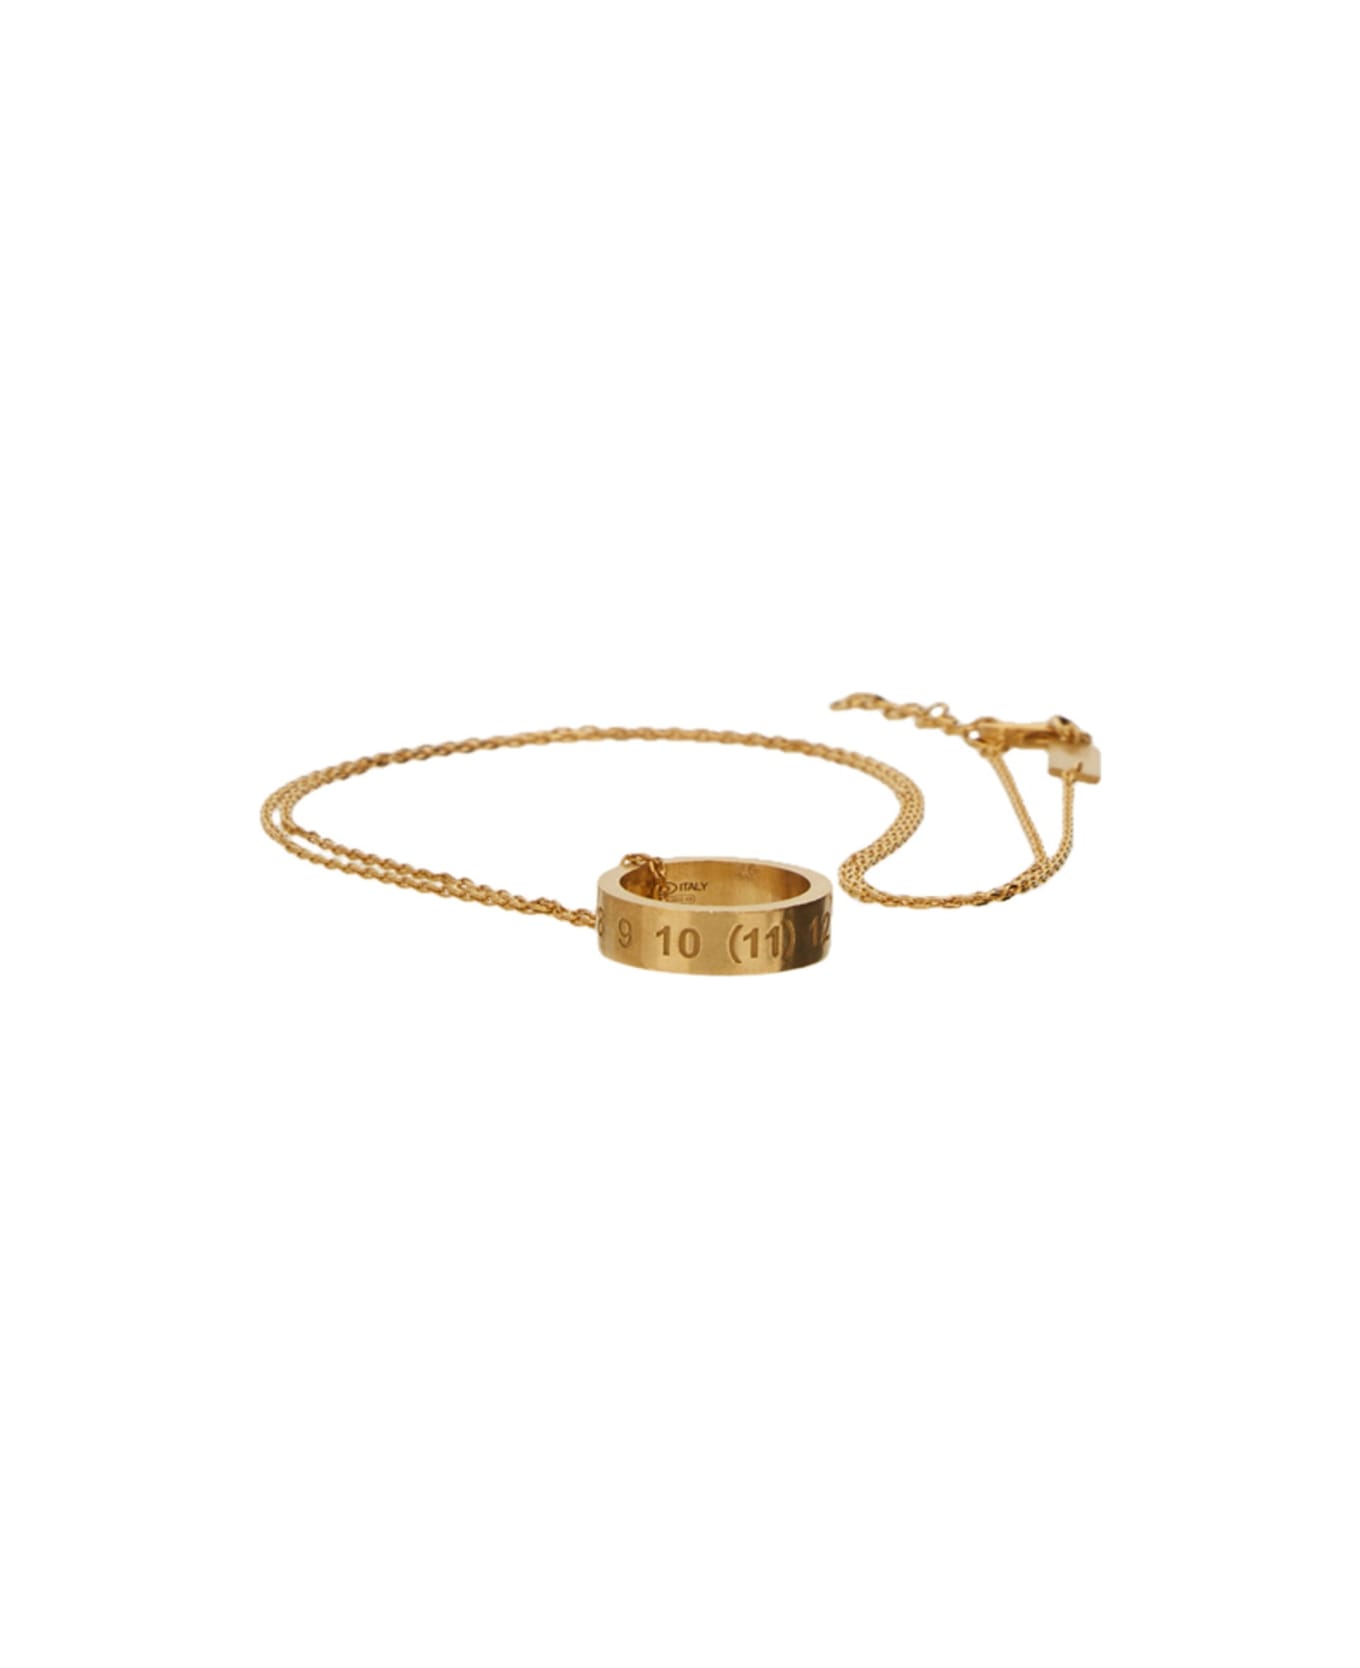 Maison Margiela Number Ring Necklace - GOLD